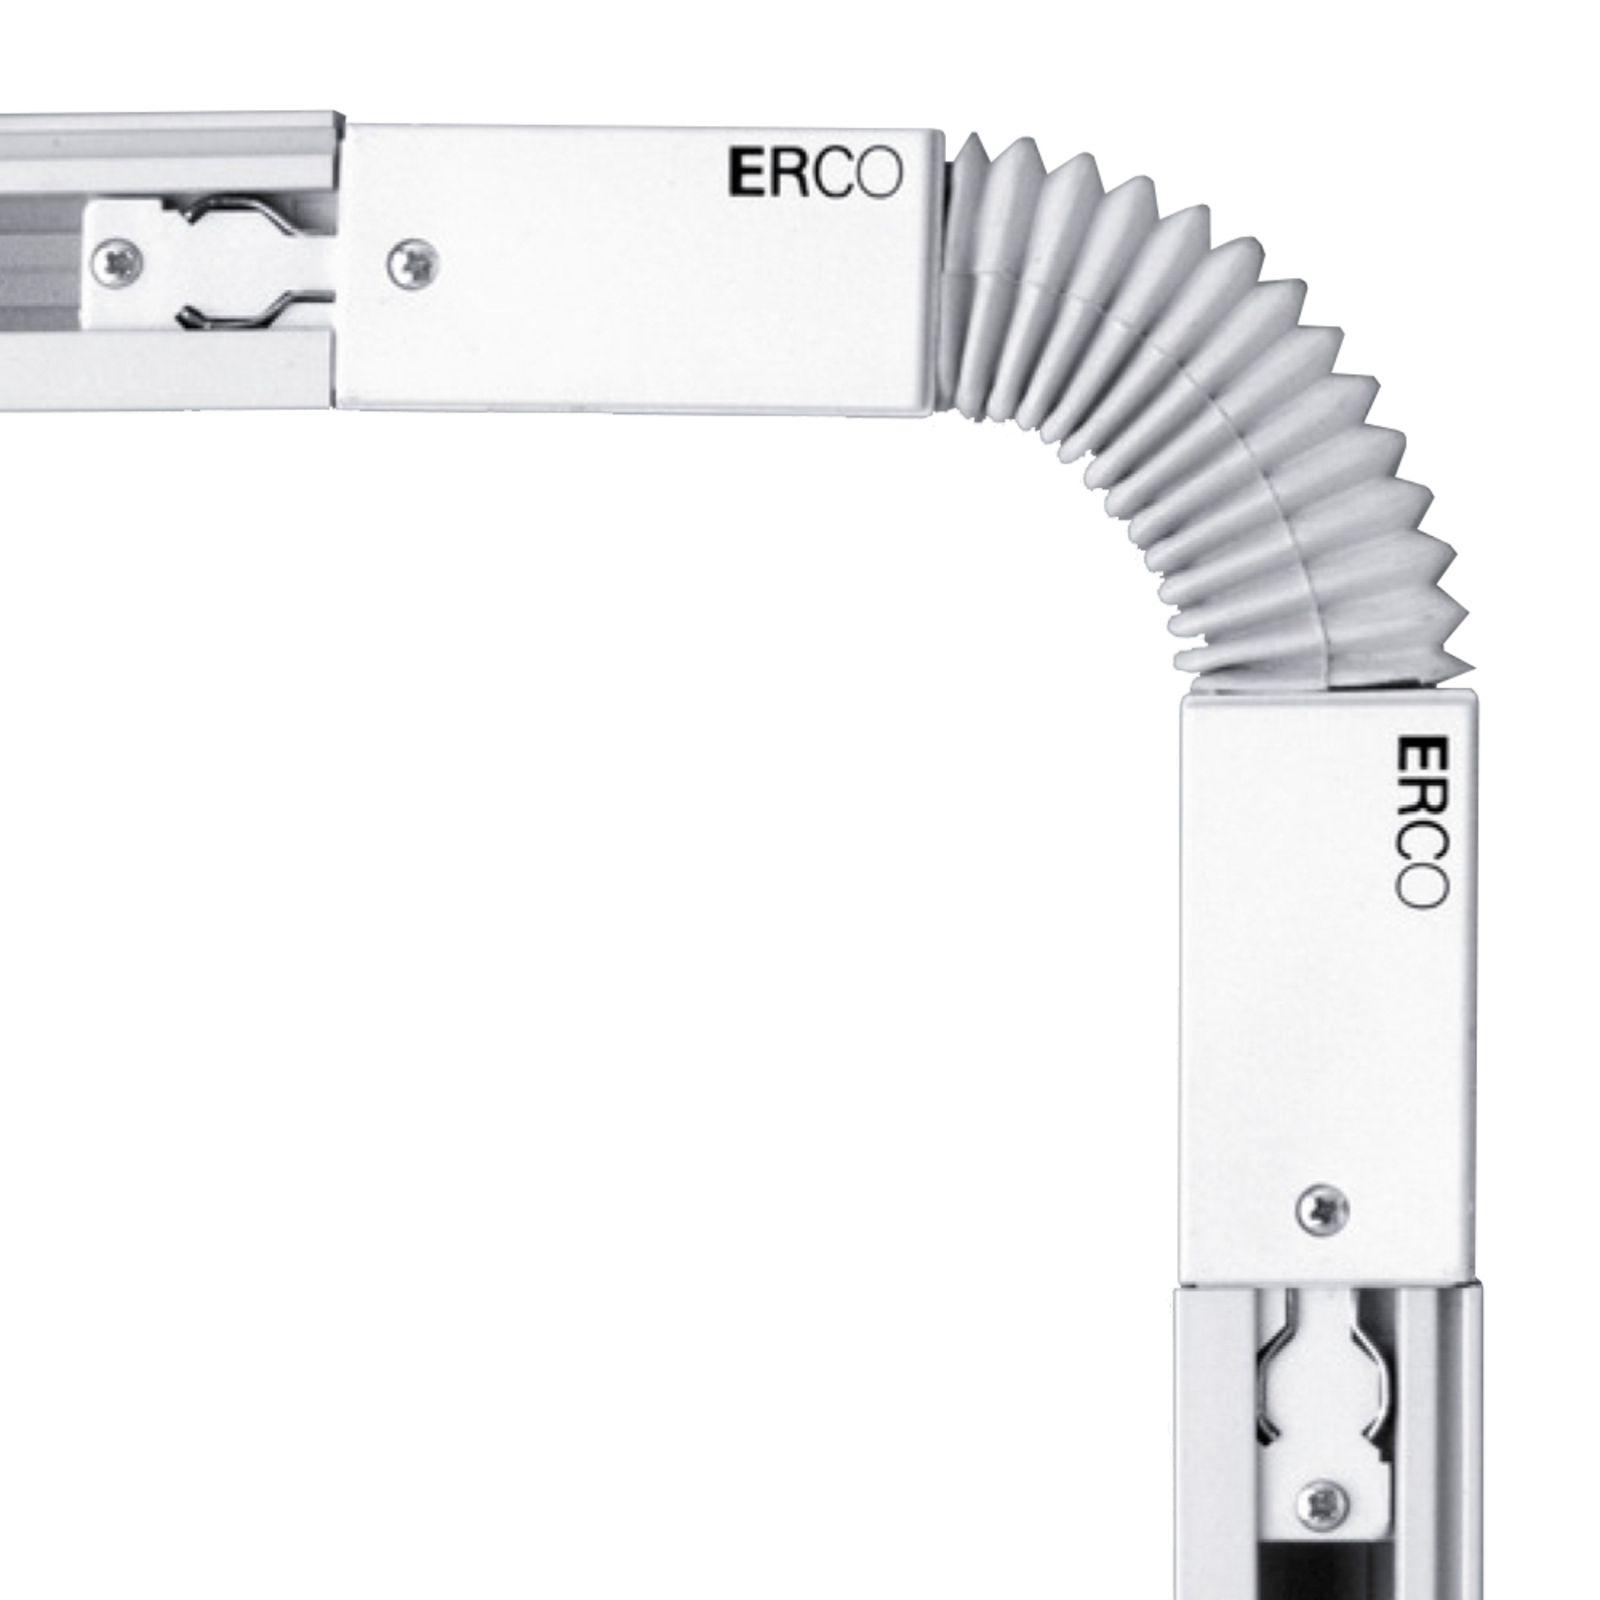 ERCO Multiflex spojka 3-kanalni tir bele barve